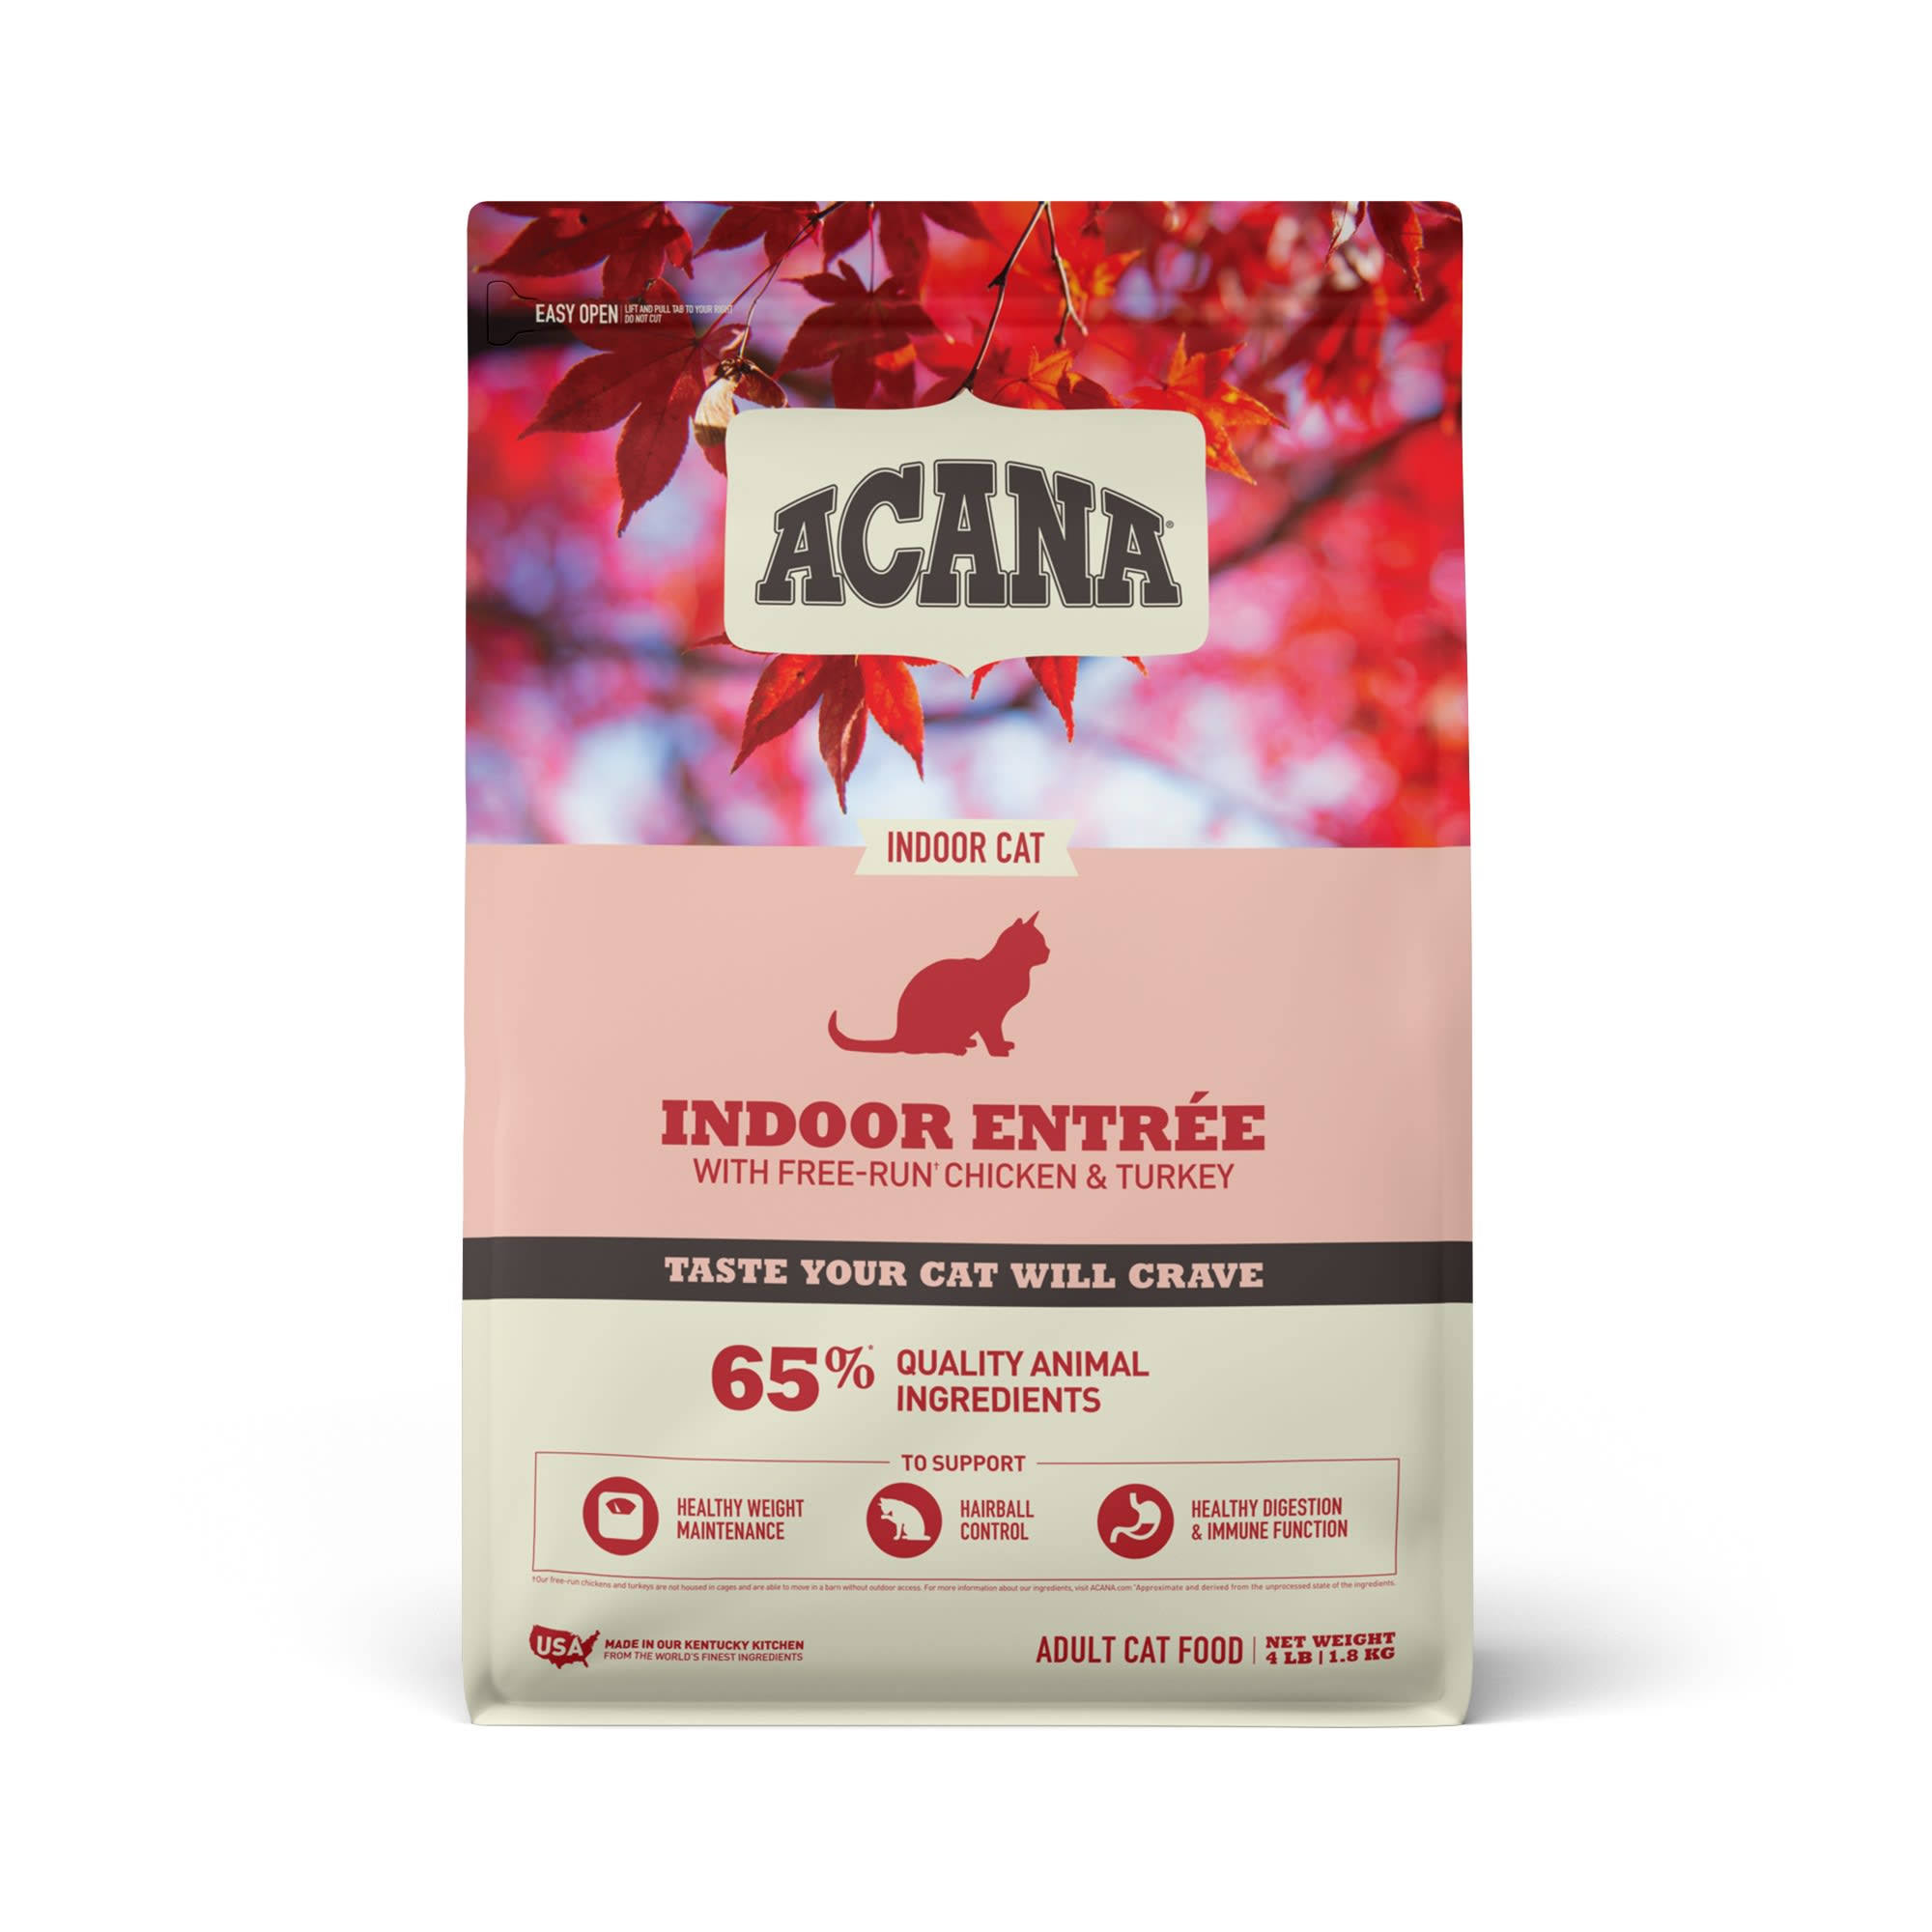 ACANA Indoor Entree Dry Cat Food, 4 lbs.